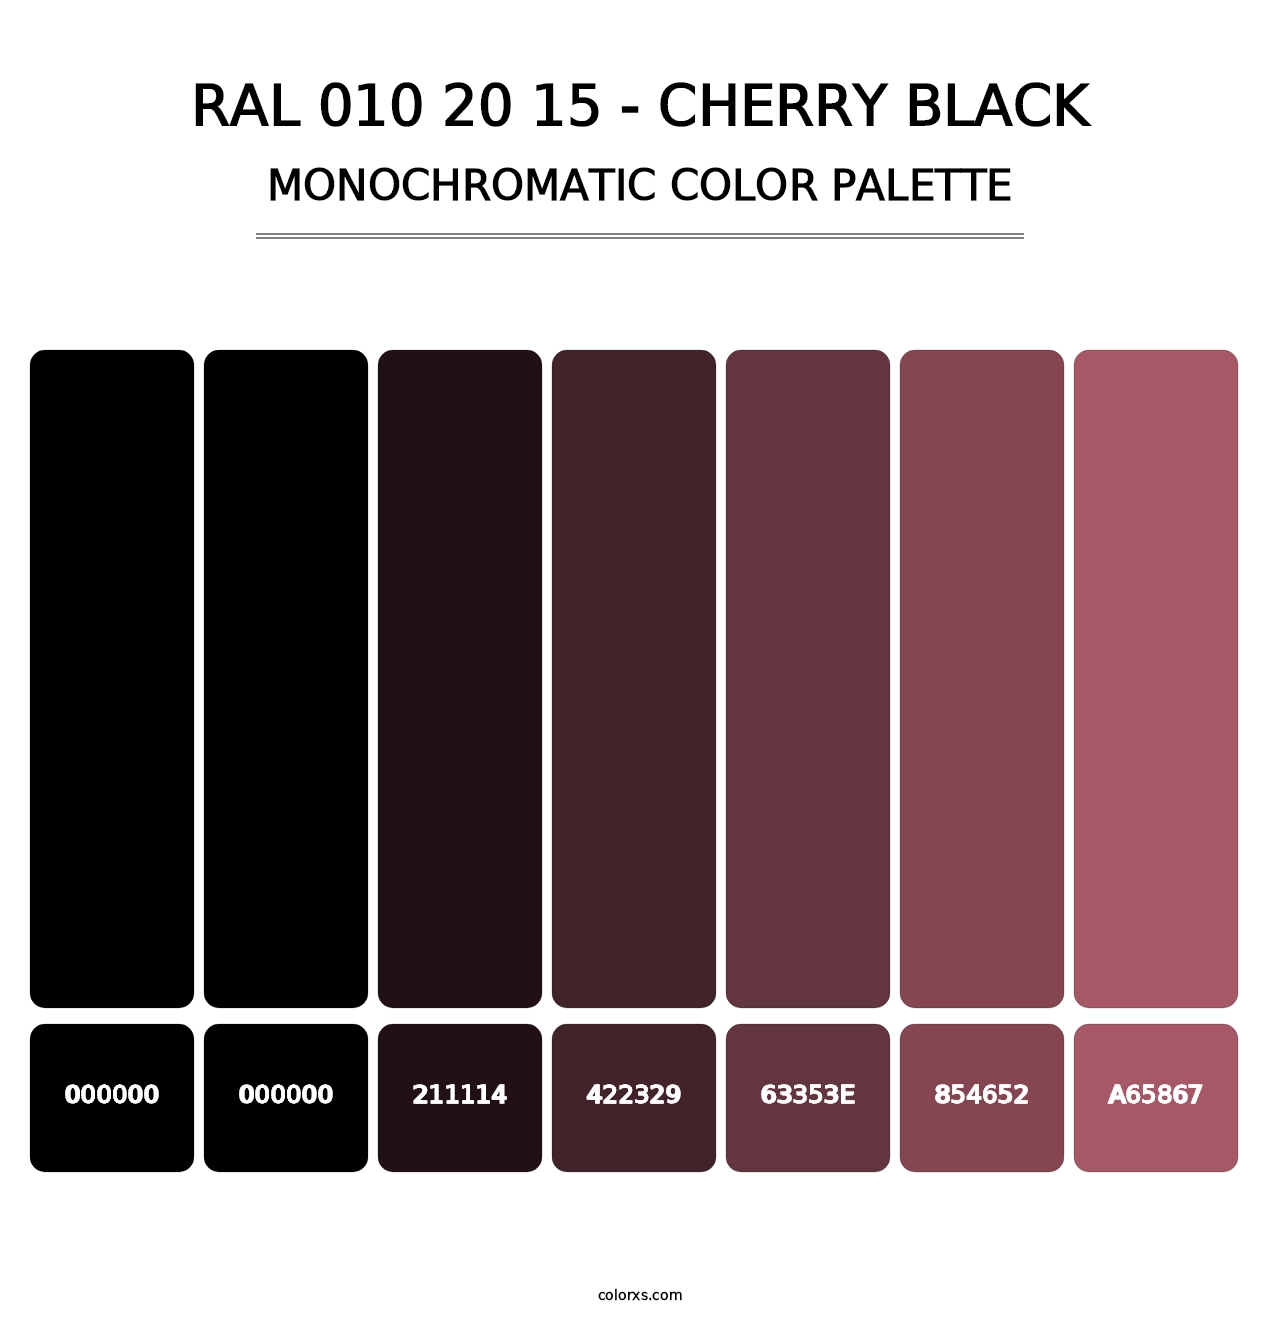 RAL 010 20 15 - Cherry Black - Monochromatic Color Palette